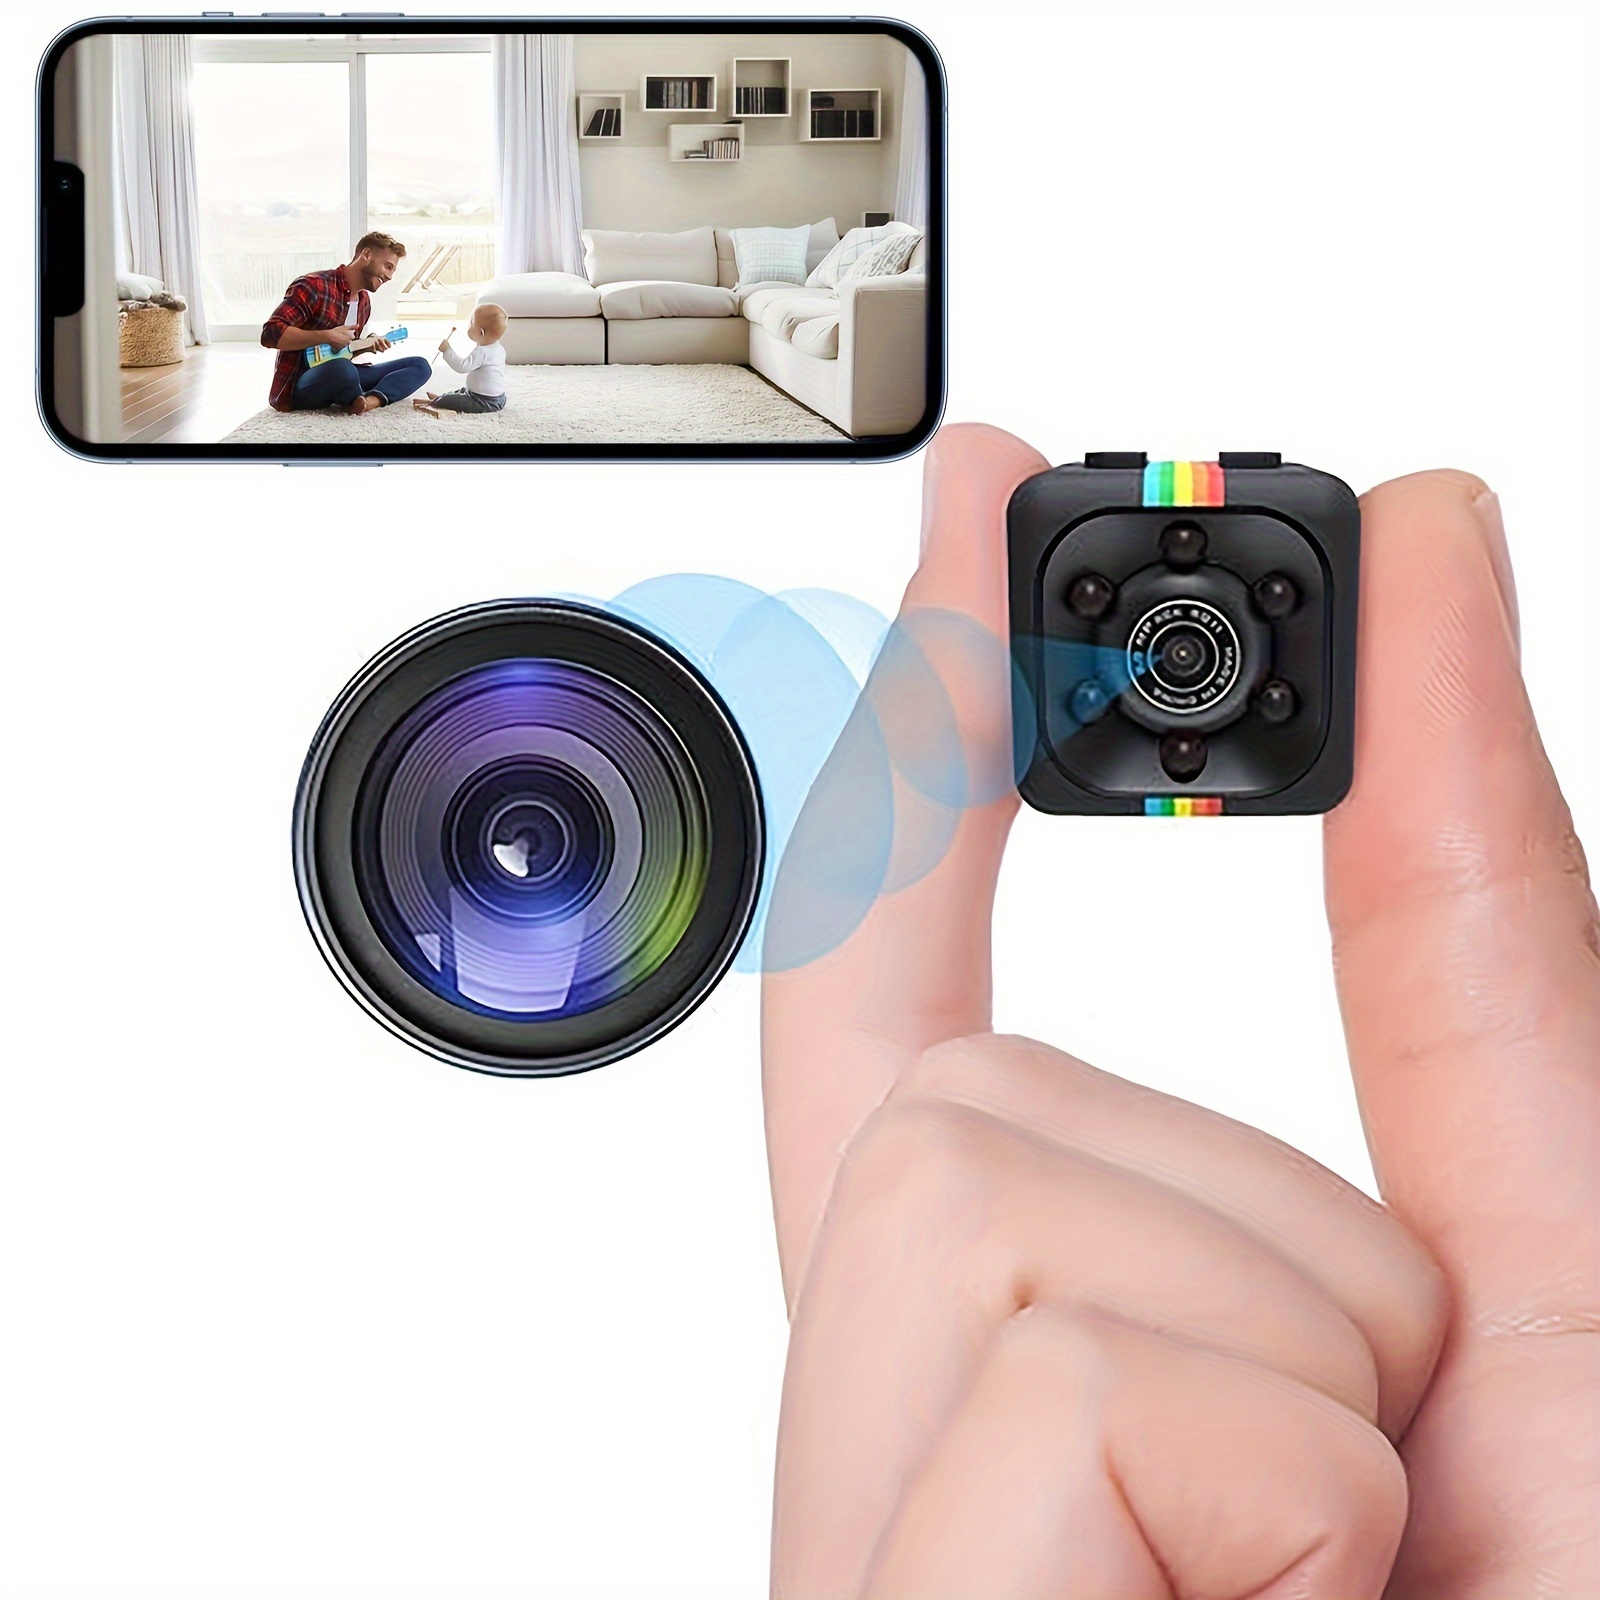 

1pc Mini Camera, Hd Audio And Video Recording, Night Vision Motion Detection, Small Dog Camera Nanny Camera, Home Security Monitor